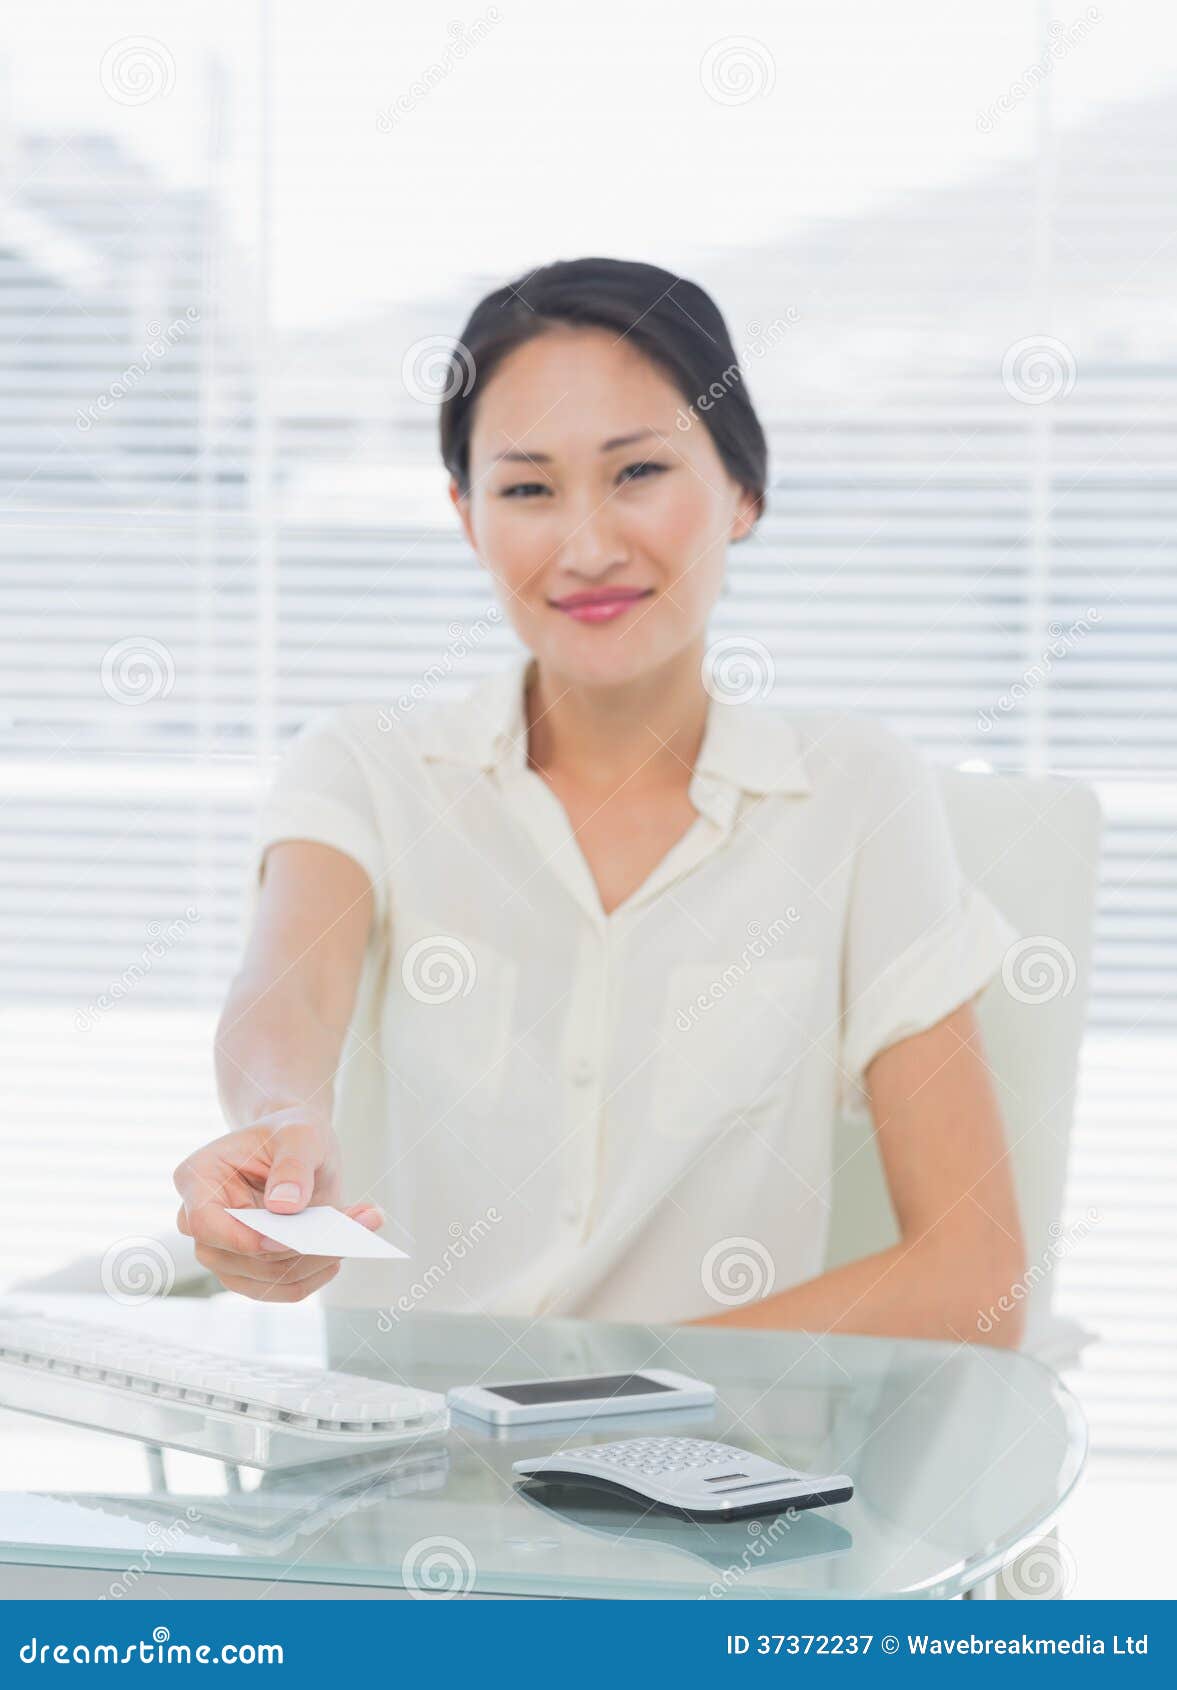 woman-handing-over-her-business-card-desk-37372237.jpg